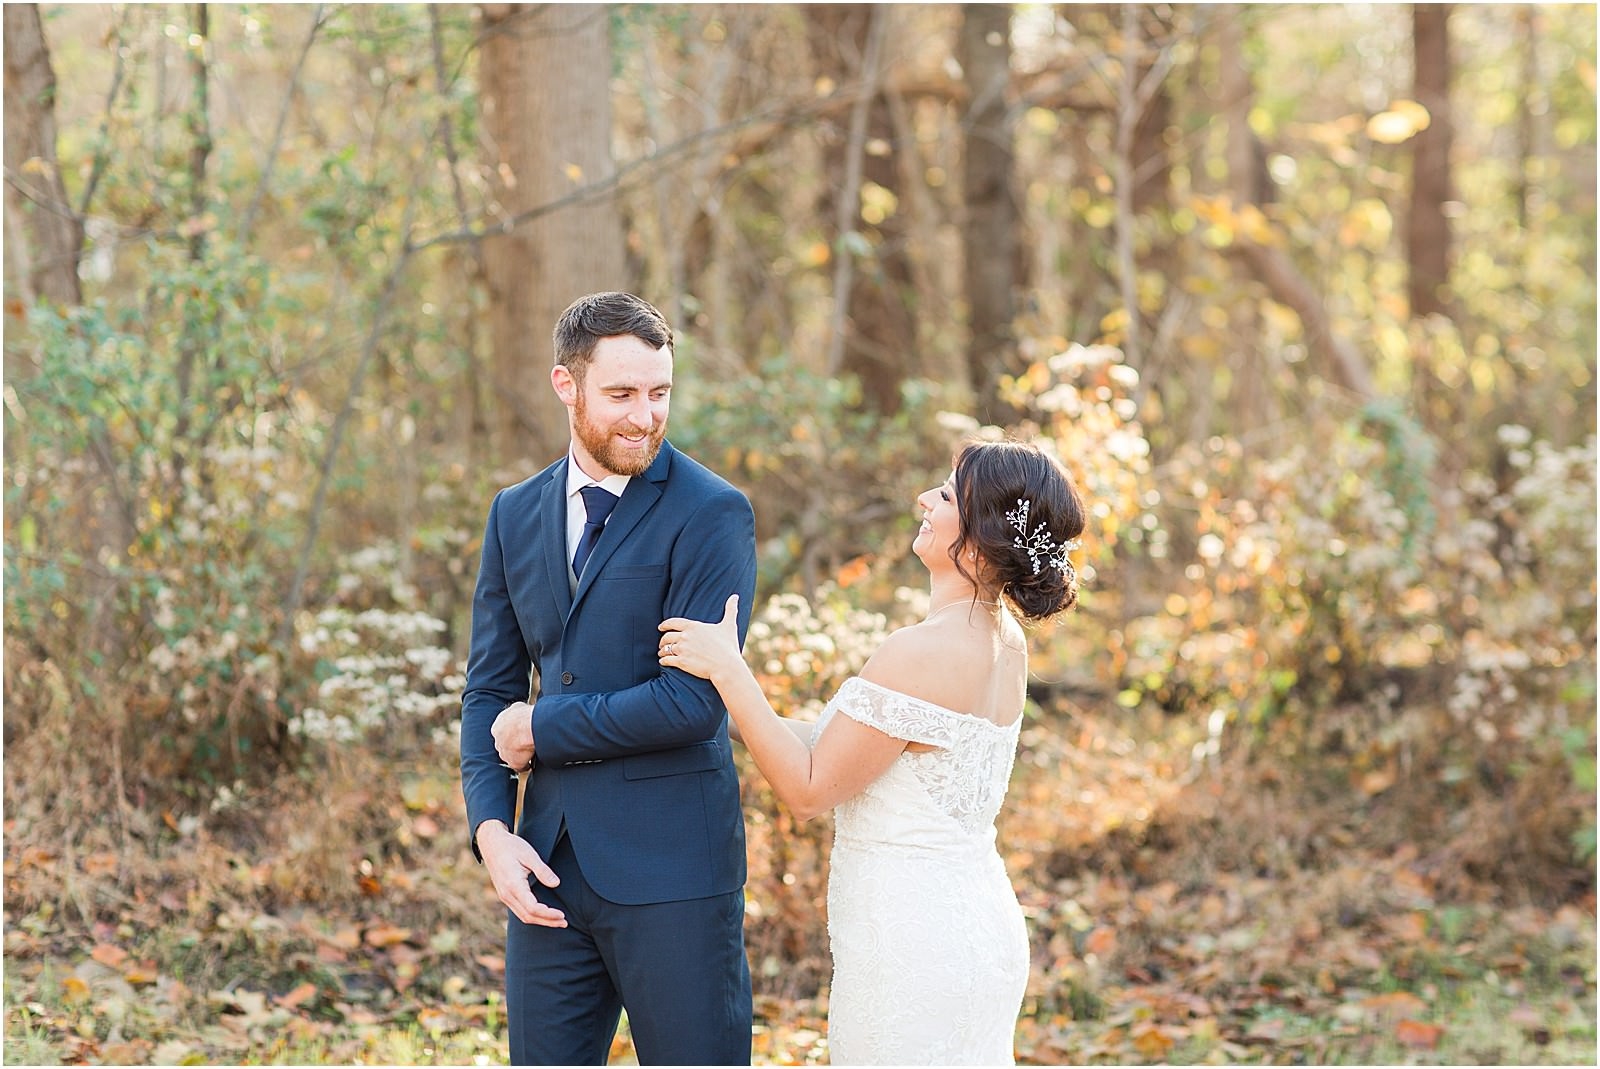 Walker and Alyssa's intimate fall wedding in Southern Indiana. | Wedding Photography | The Corner House Wedding | Southern Indiana Wedding | #fallwedding #intimatewedding | 025.jpg